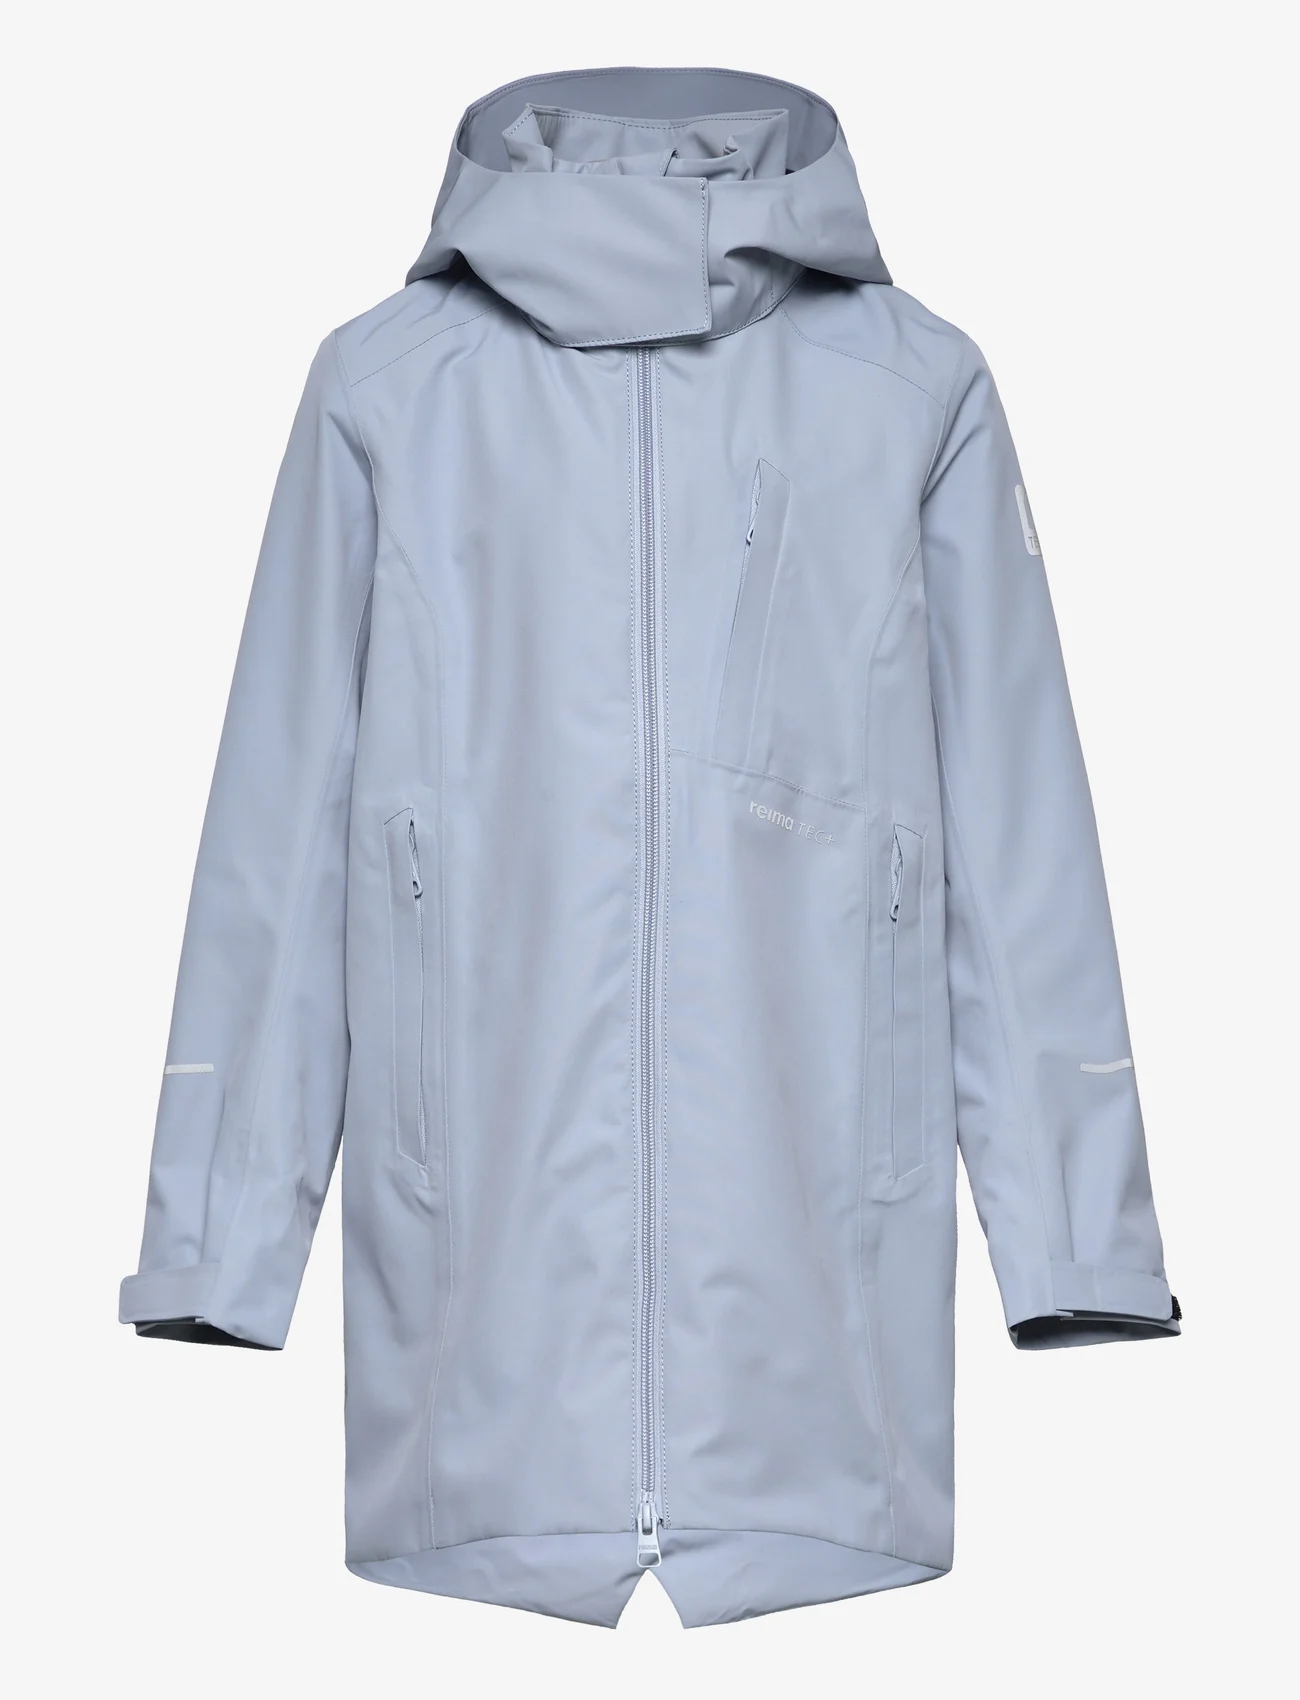 Reima - Reimatec jacket, Muutun - rain jackets - foggy blue - 0